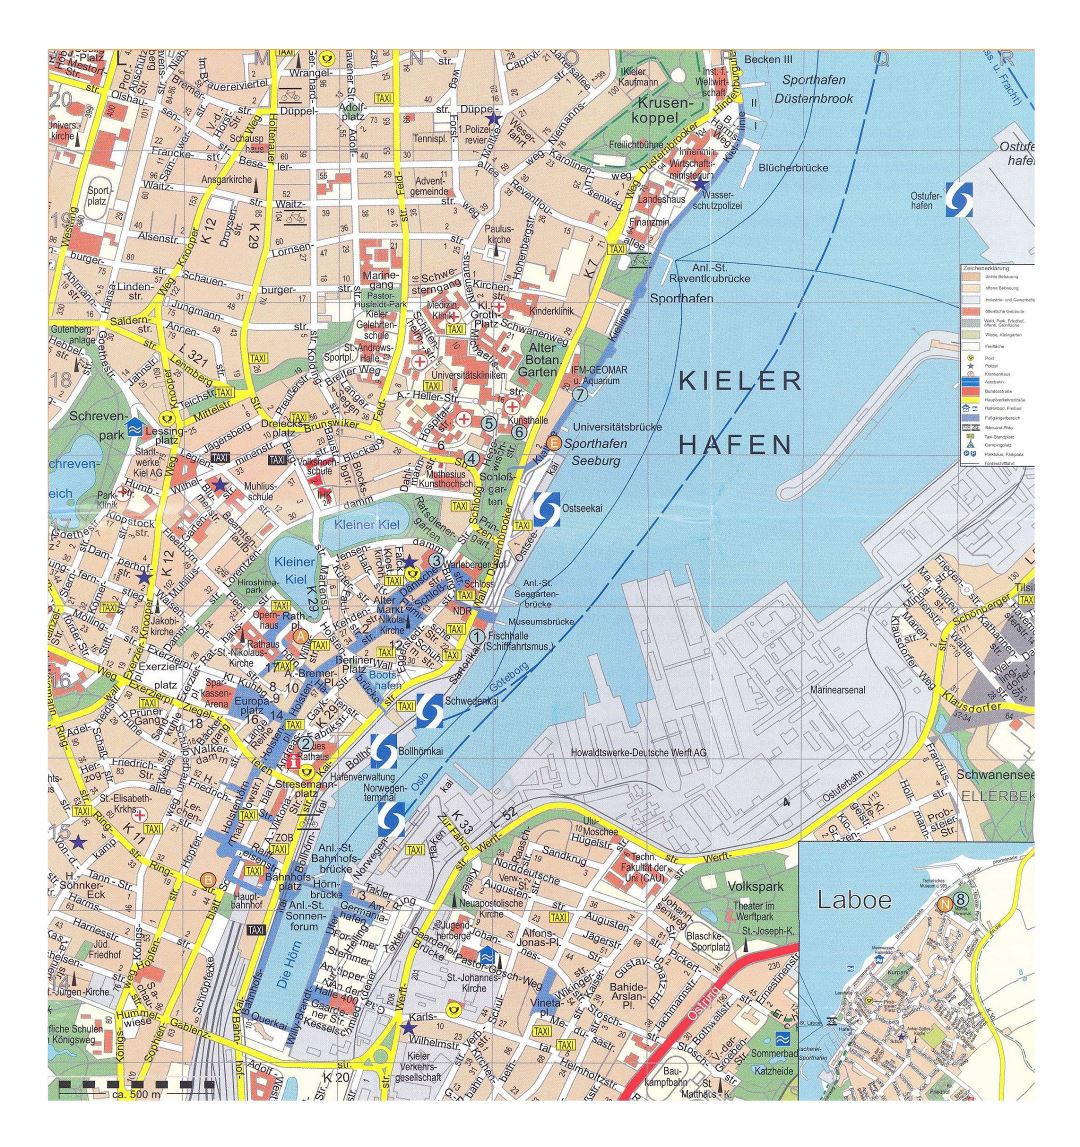 Large detailed tourist map of central part of Kiel city